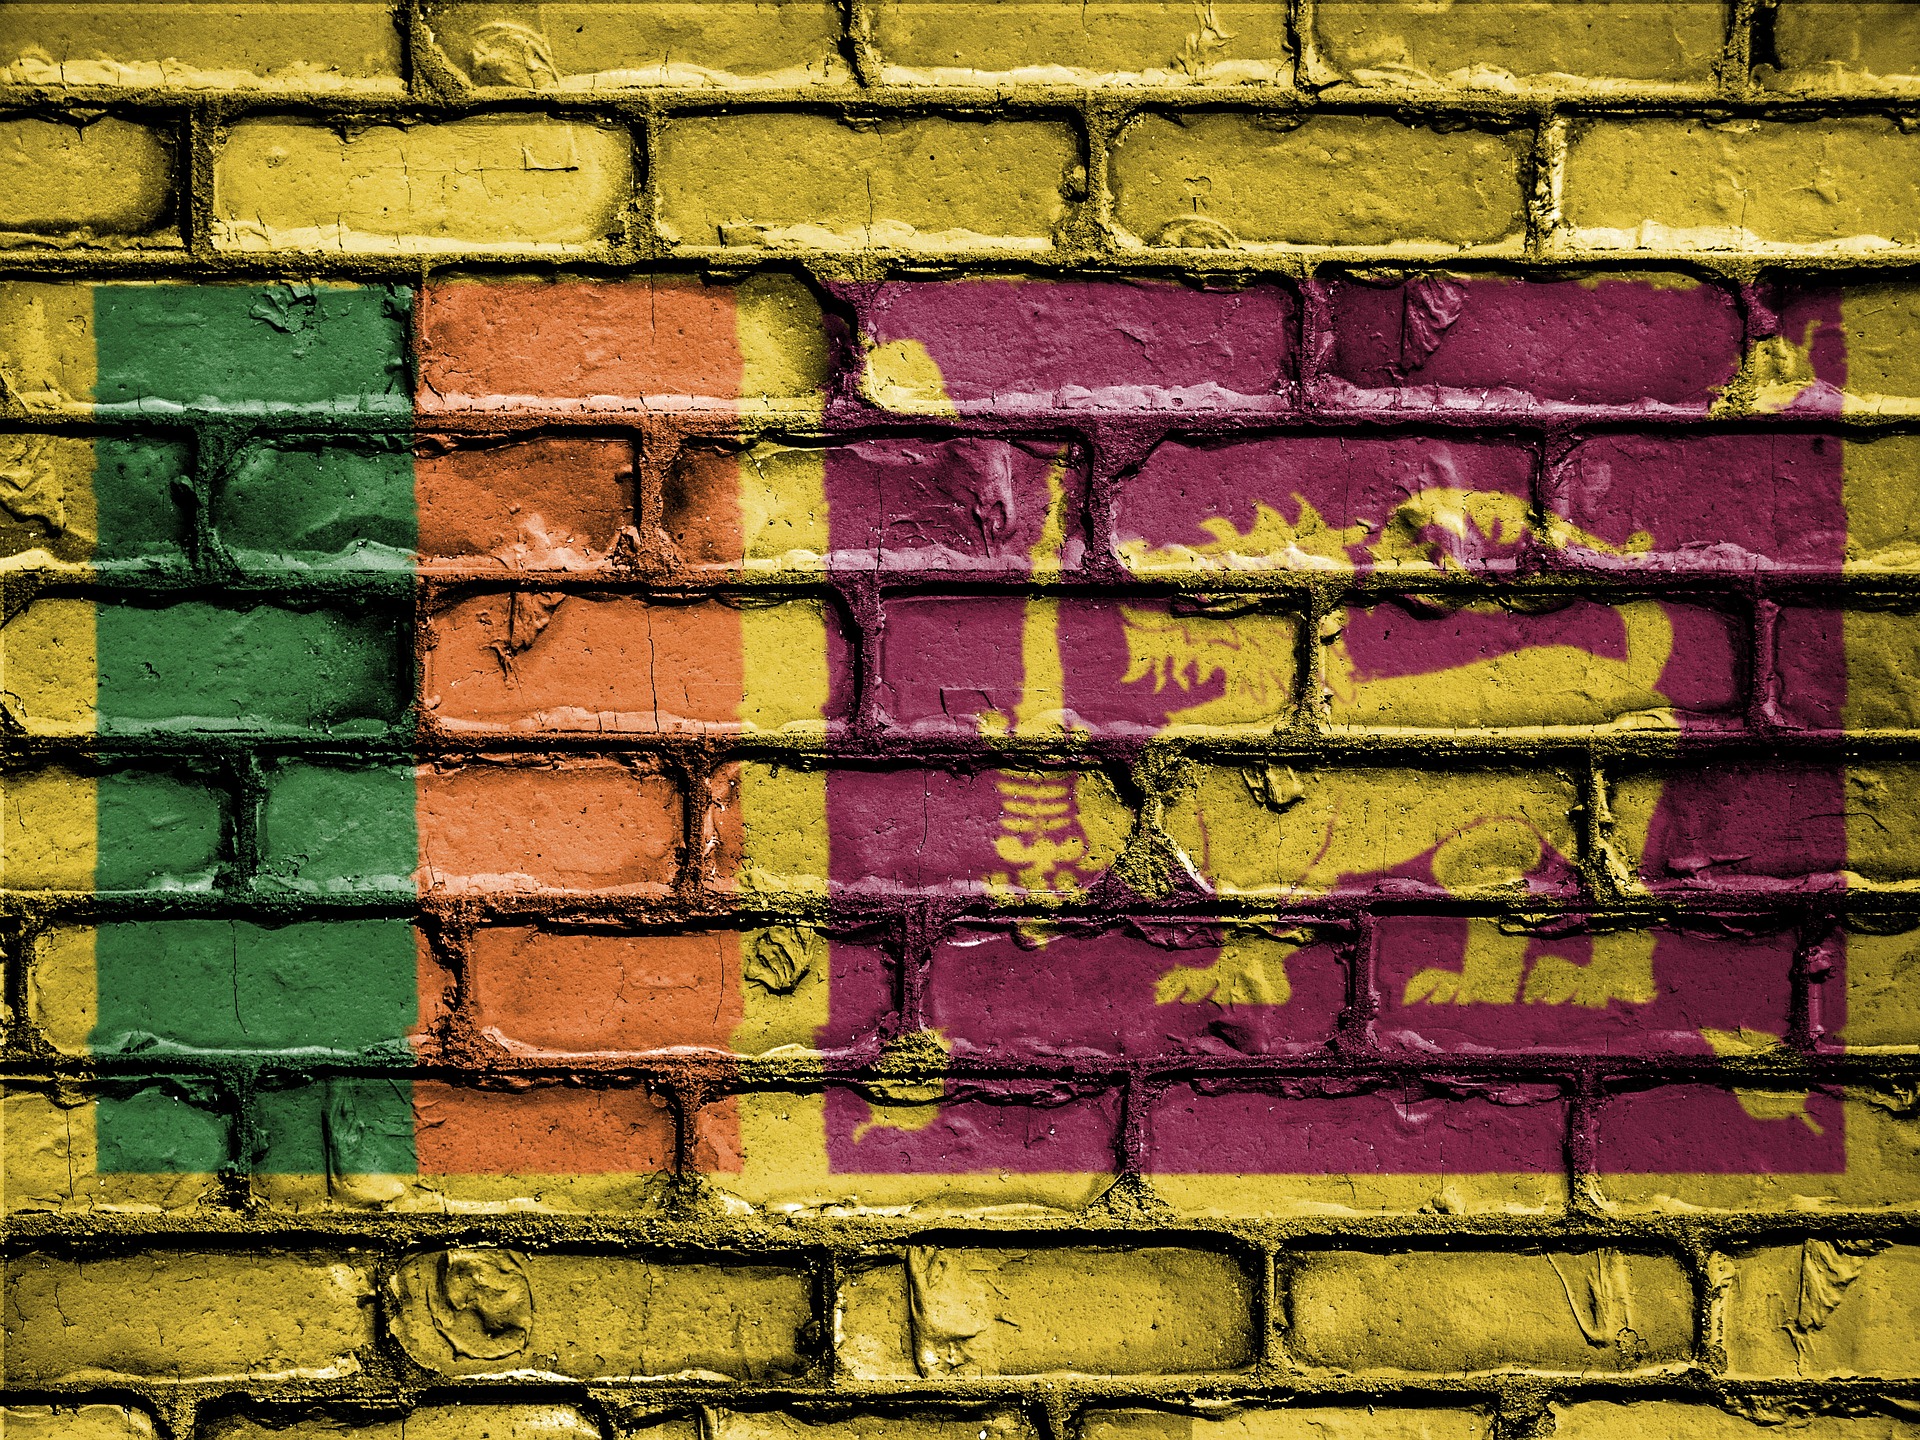 The Sri Lankan Flag (photo credit: Pixabay)